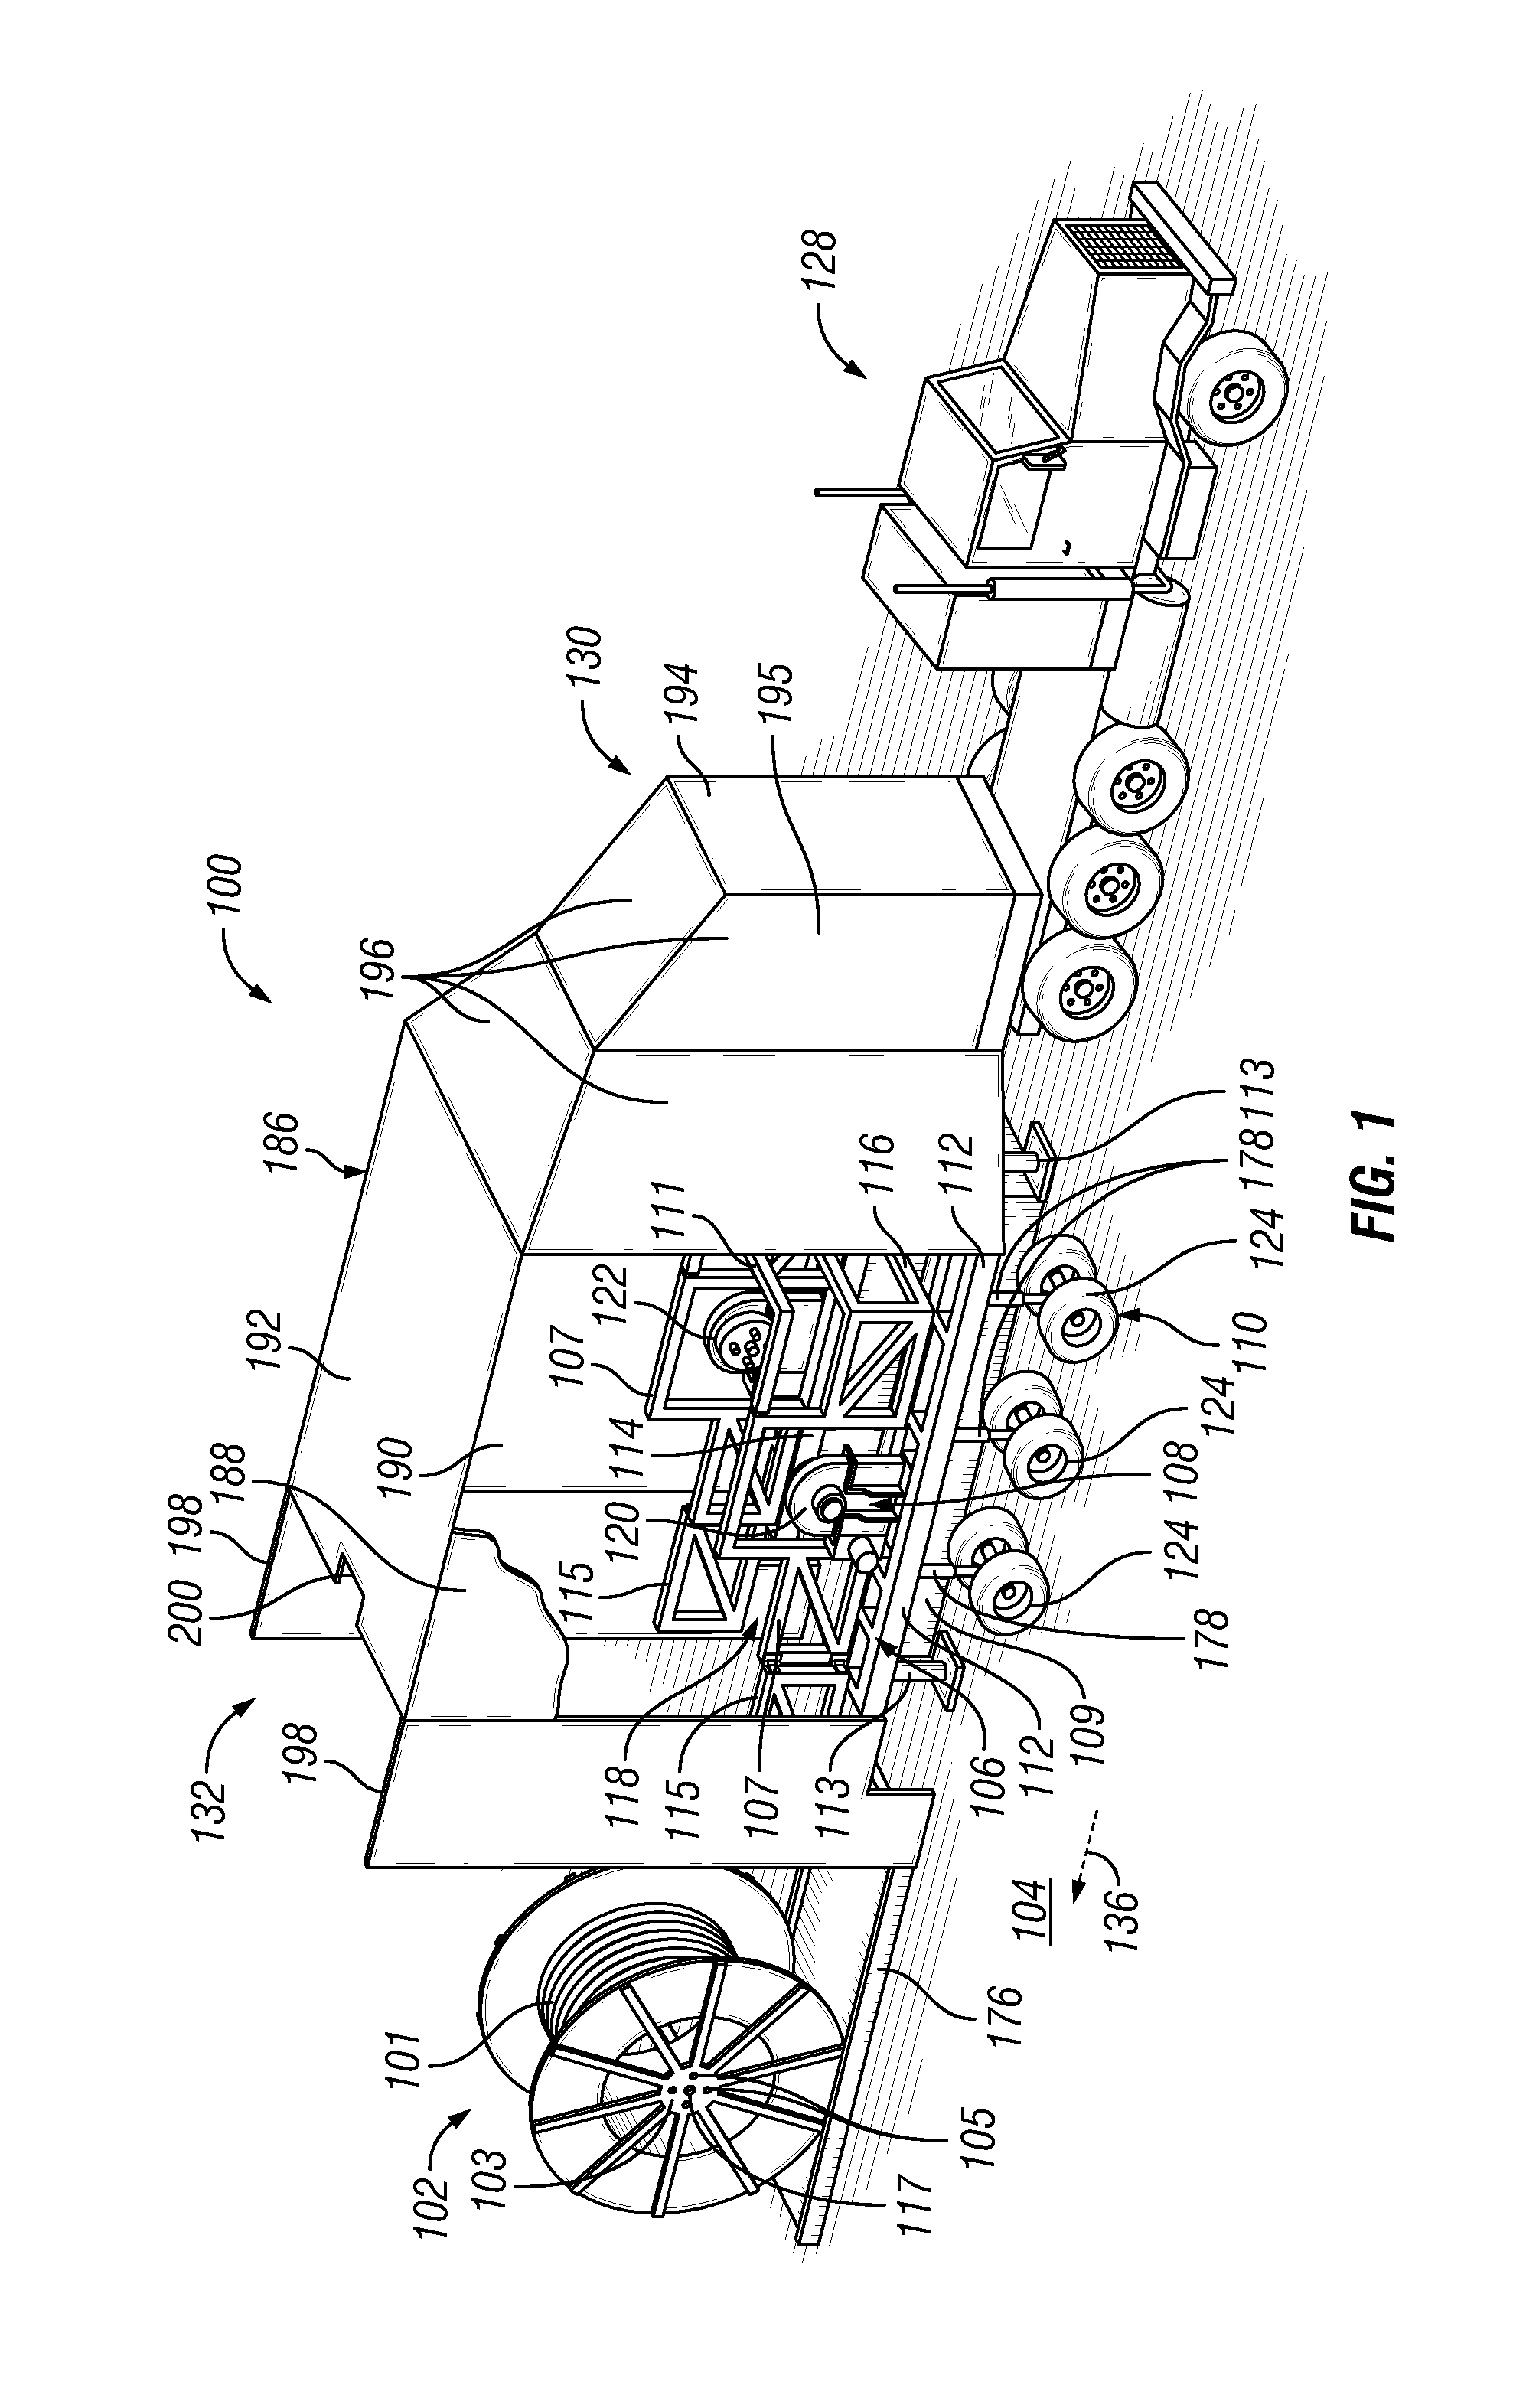 Reel transport apparatus and method